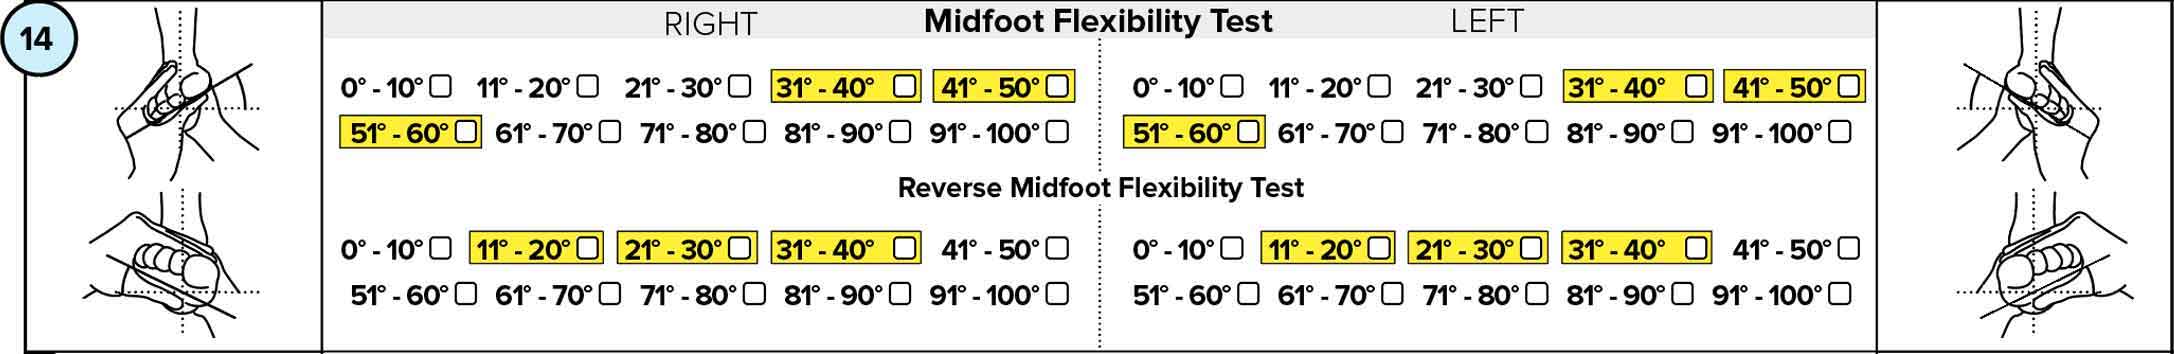 Midfoot Flexibility measurement